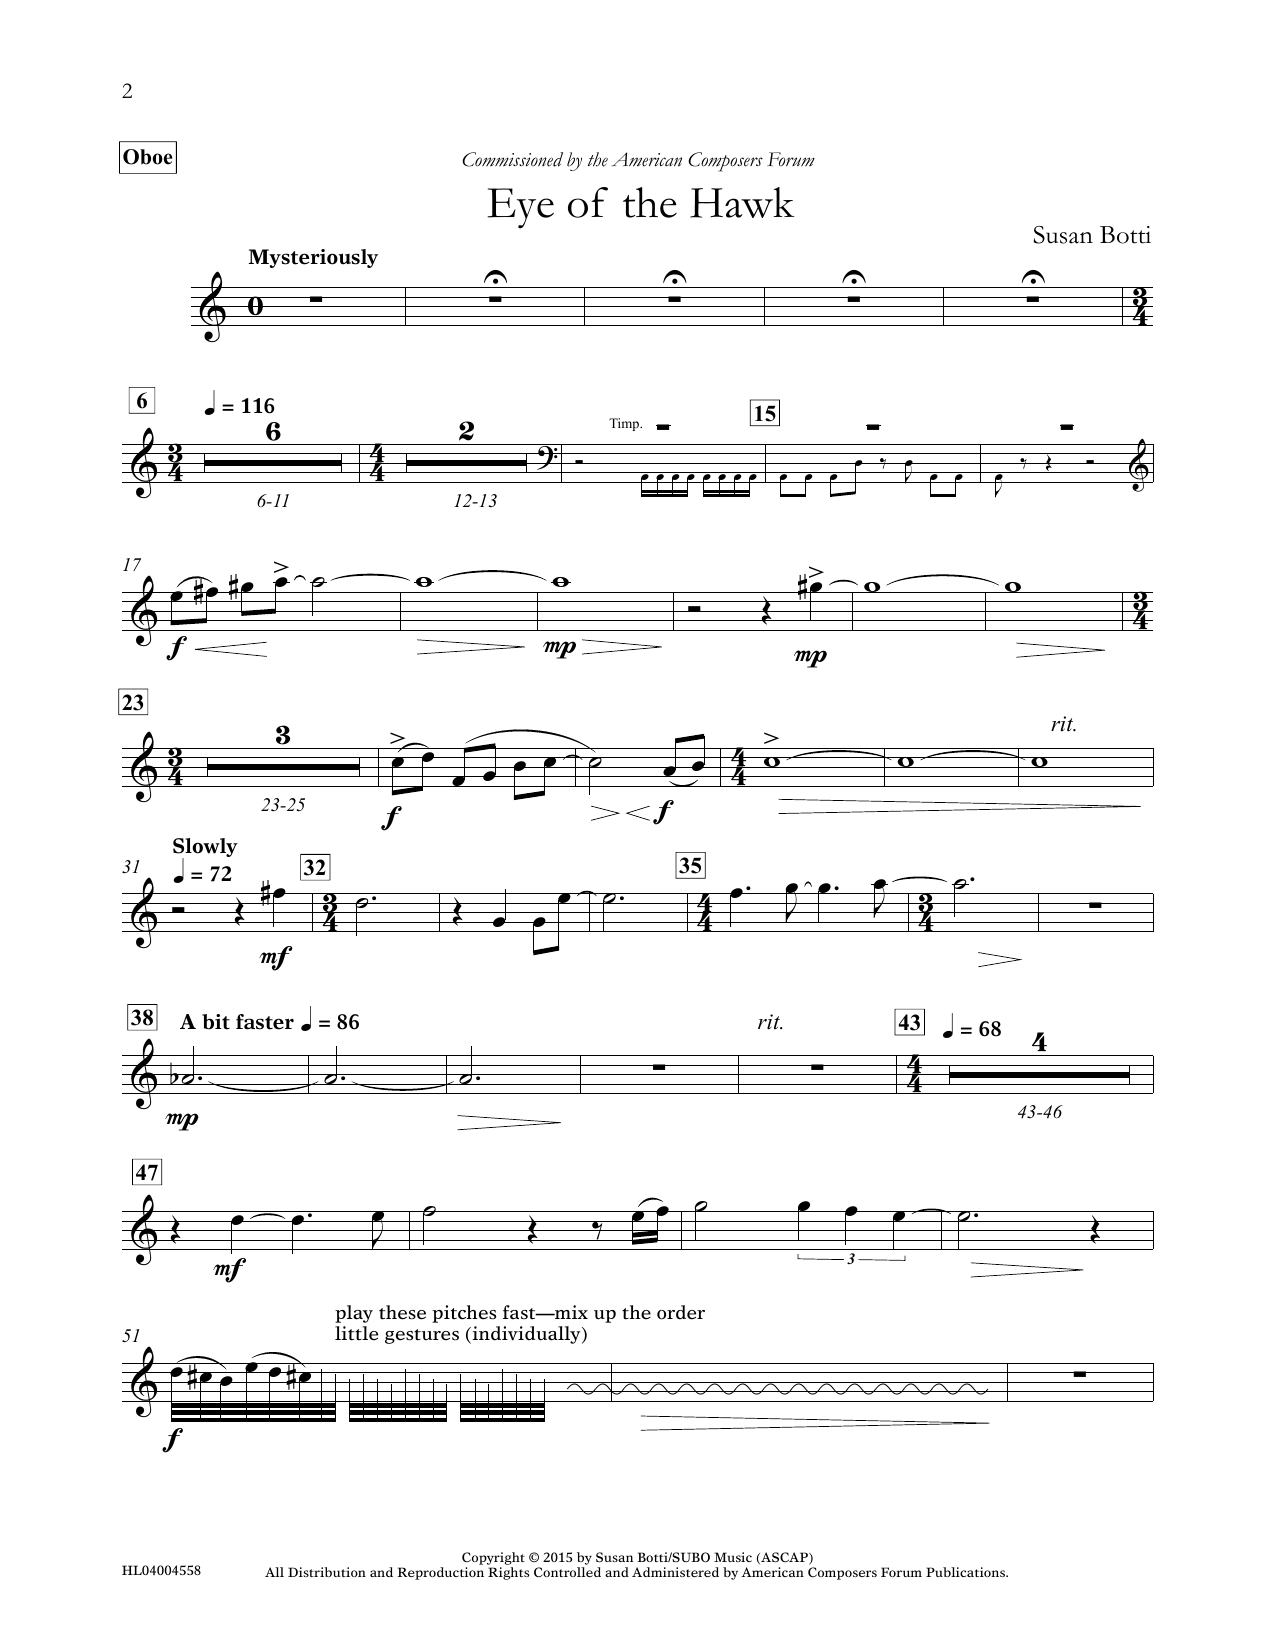 Download Susan Botti Eye of the Hawk - Oboe Sheet Music